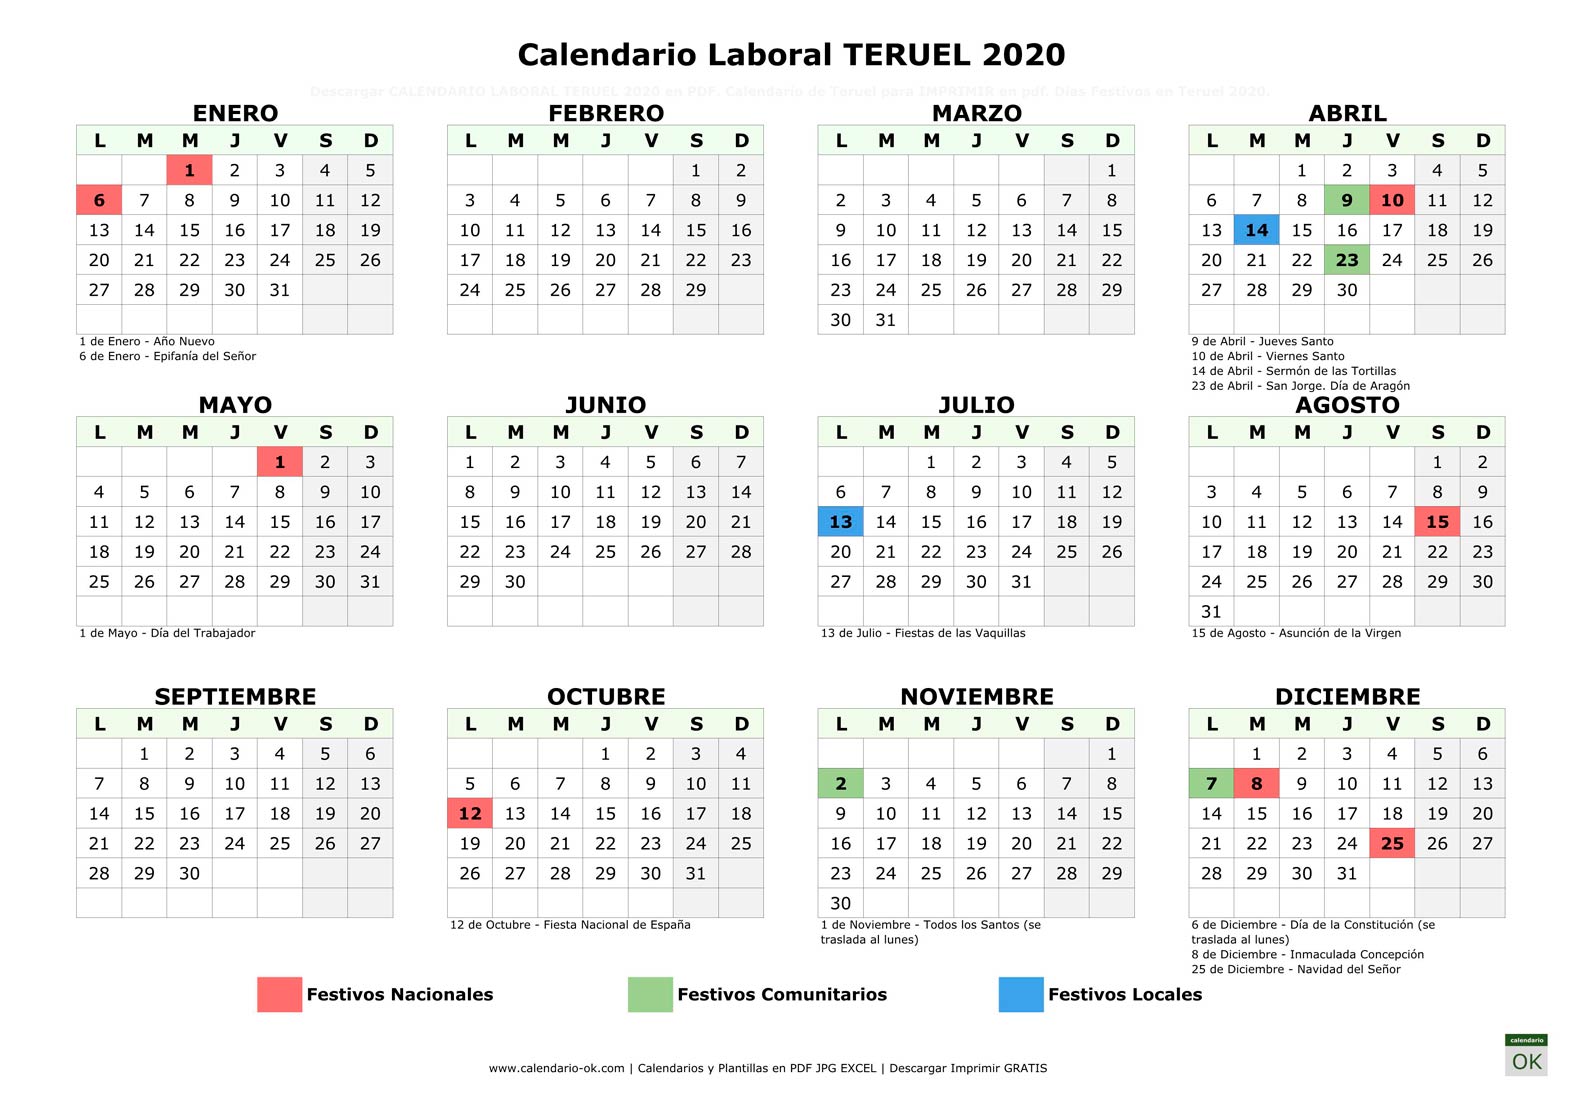 Calendario Laboral TERUEL 2020 horizontal